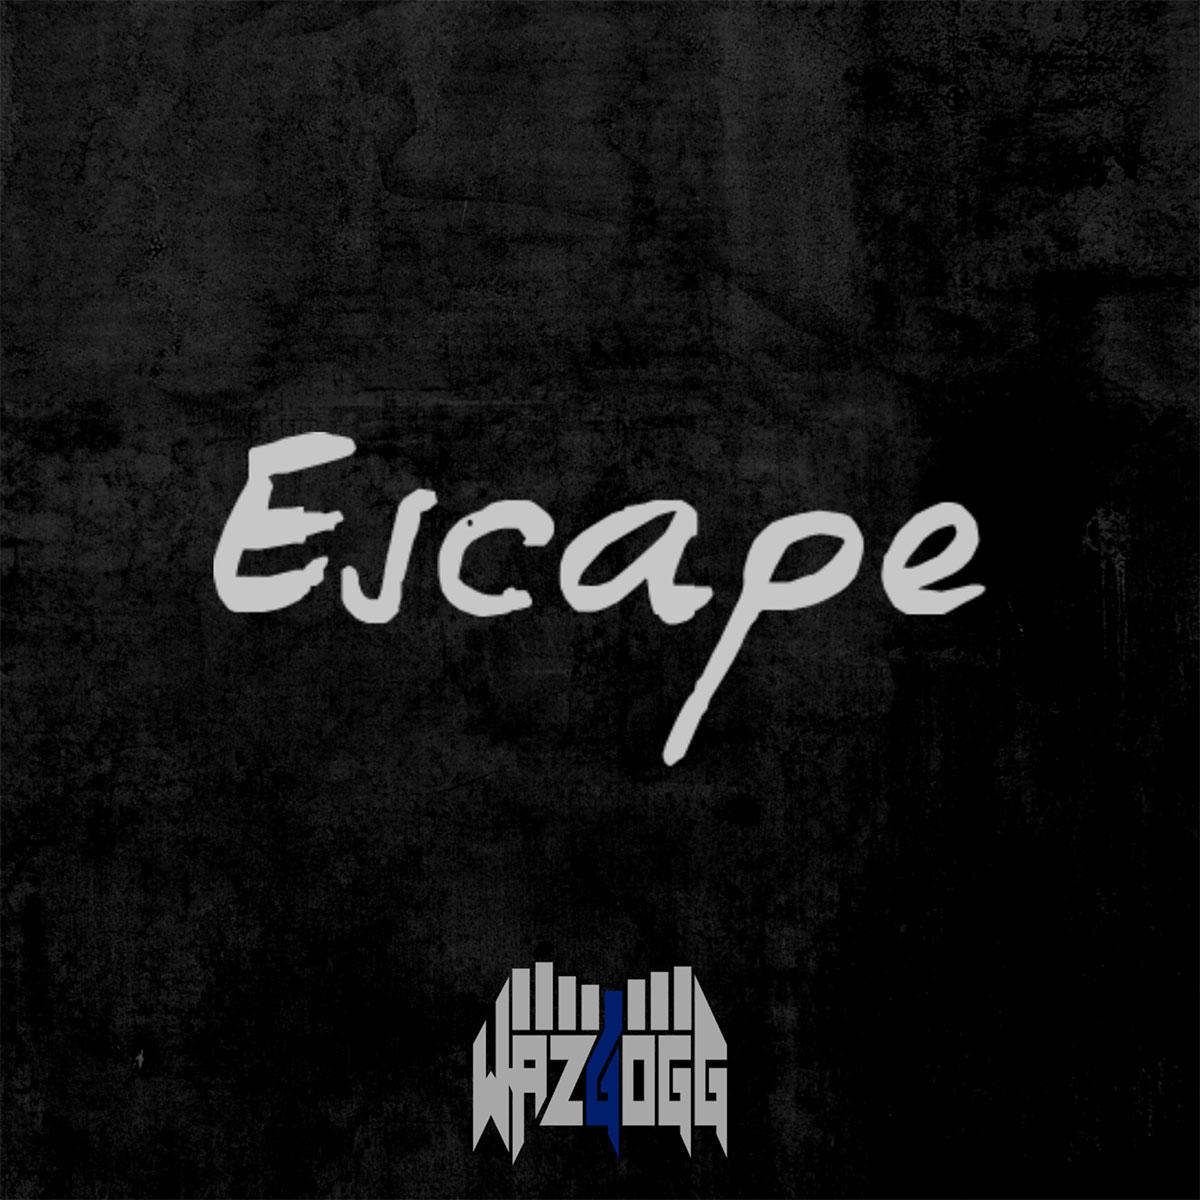 Escape_WAZGOGG_jk_20220803.jpg